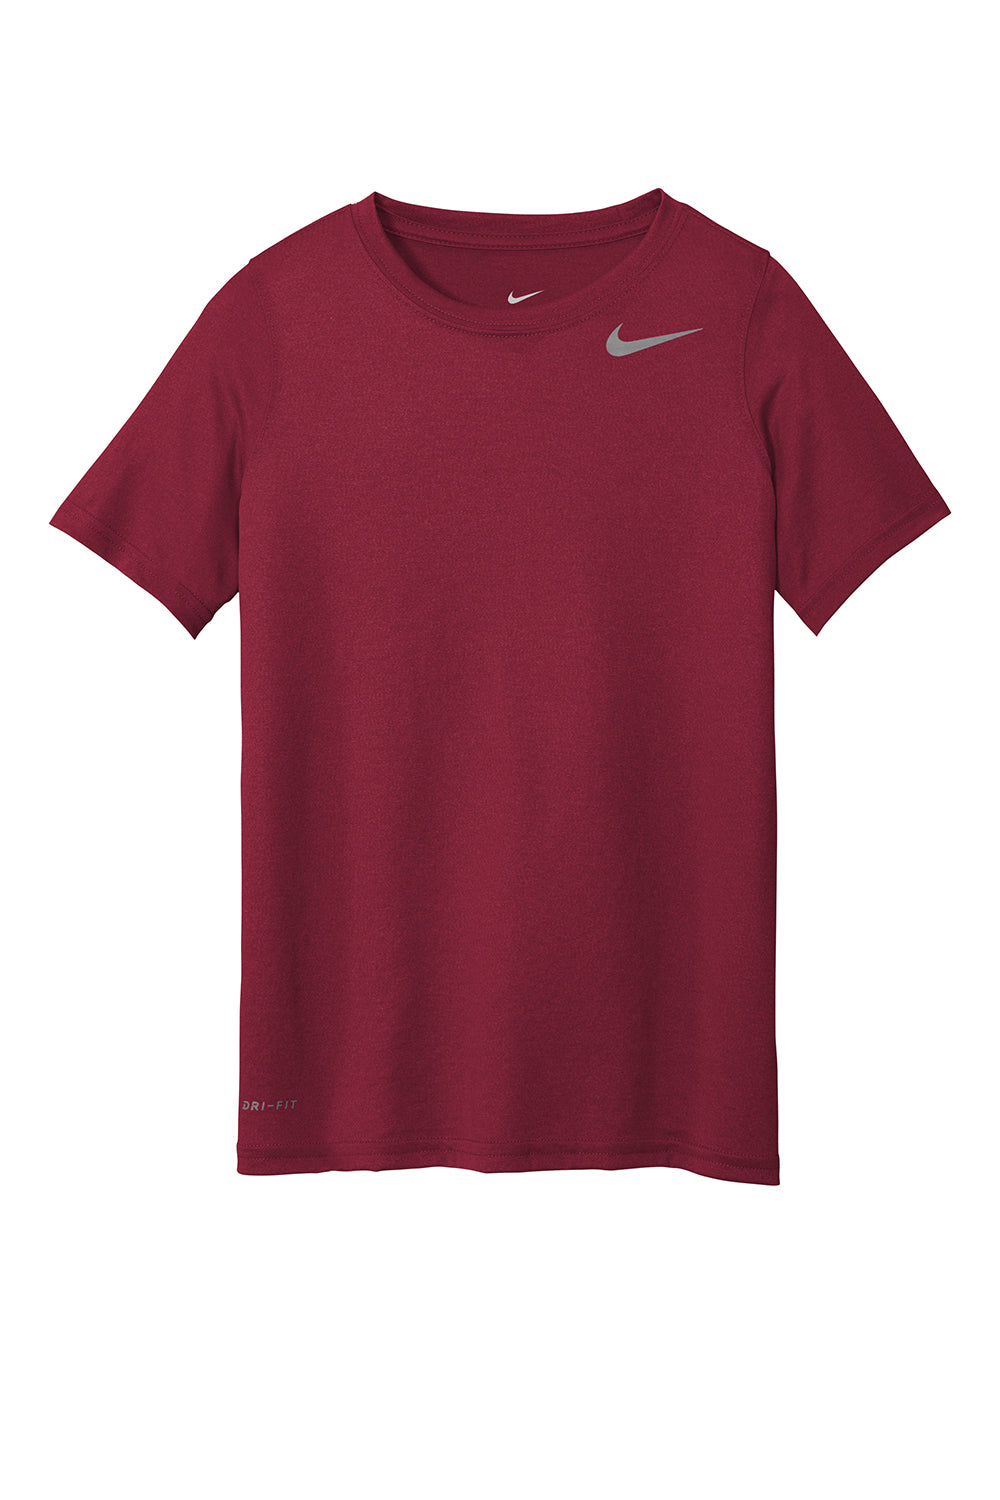 Nike DV7317 Youth Team rLegend Dri-Fit Moisure Wicking Short Sleeve Crewneck T-Shirt Team Maroon Flat Front